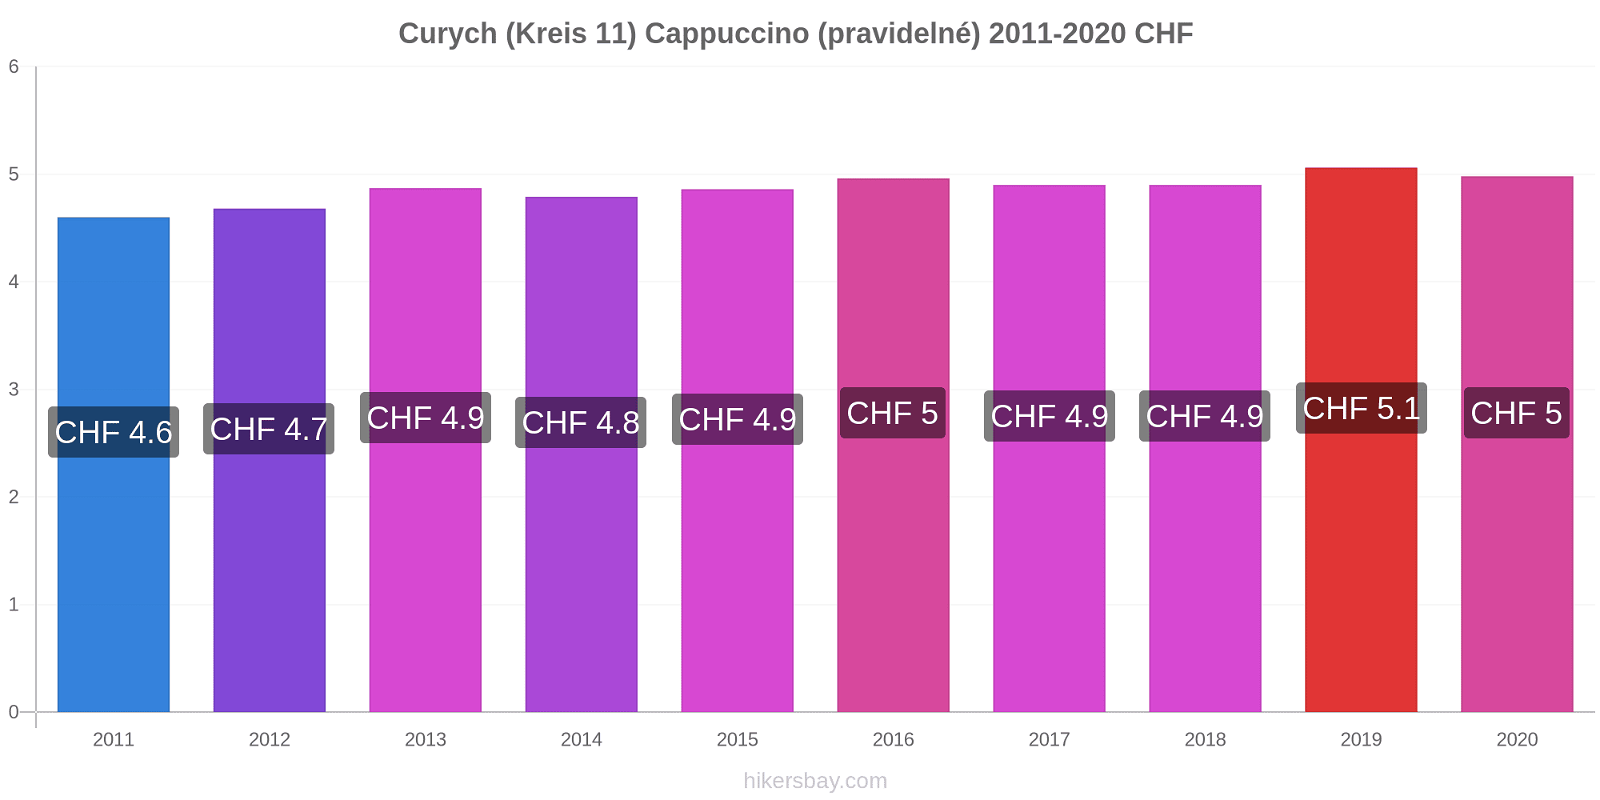 Curych (Kreis 11) změny cen Cappuccino (pravidelné) hikersbay.com